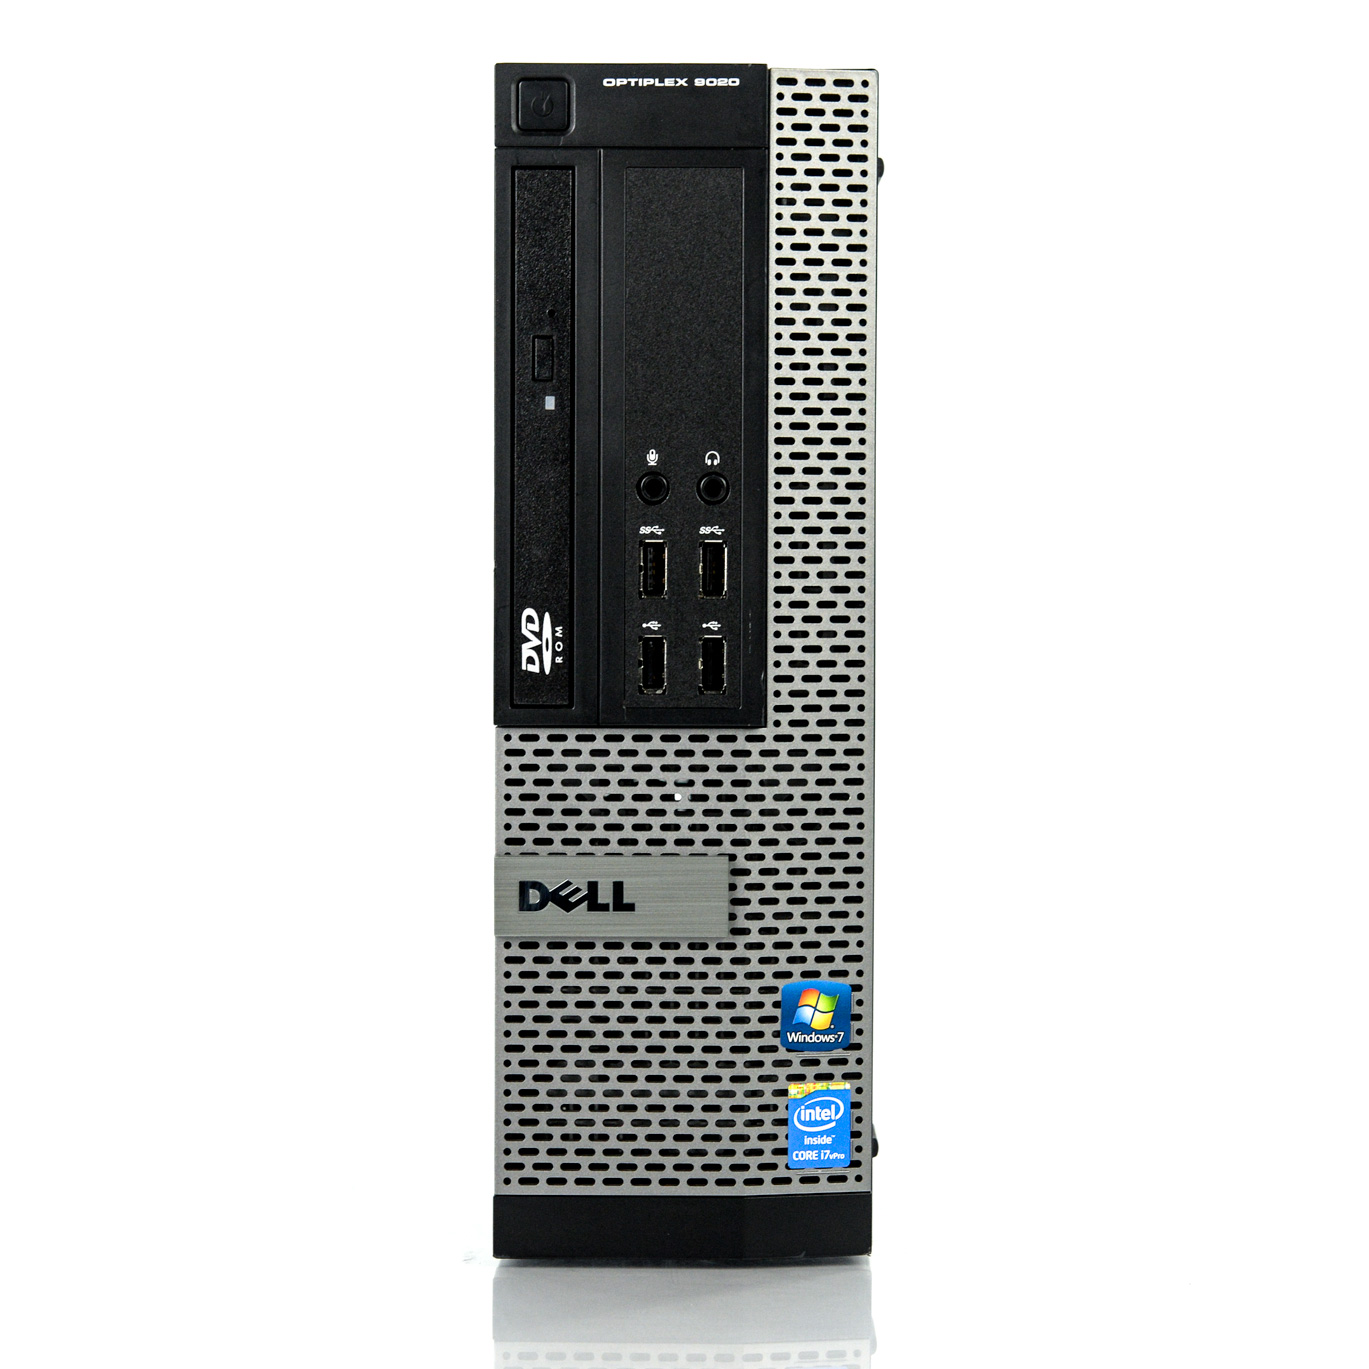 Máy tính đồng bộ Dell, Hp, Fujitsu, Lenovo. Máy trạm Workstation Dell, - 5